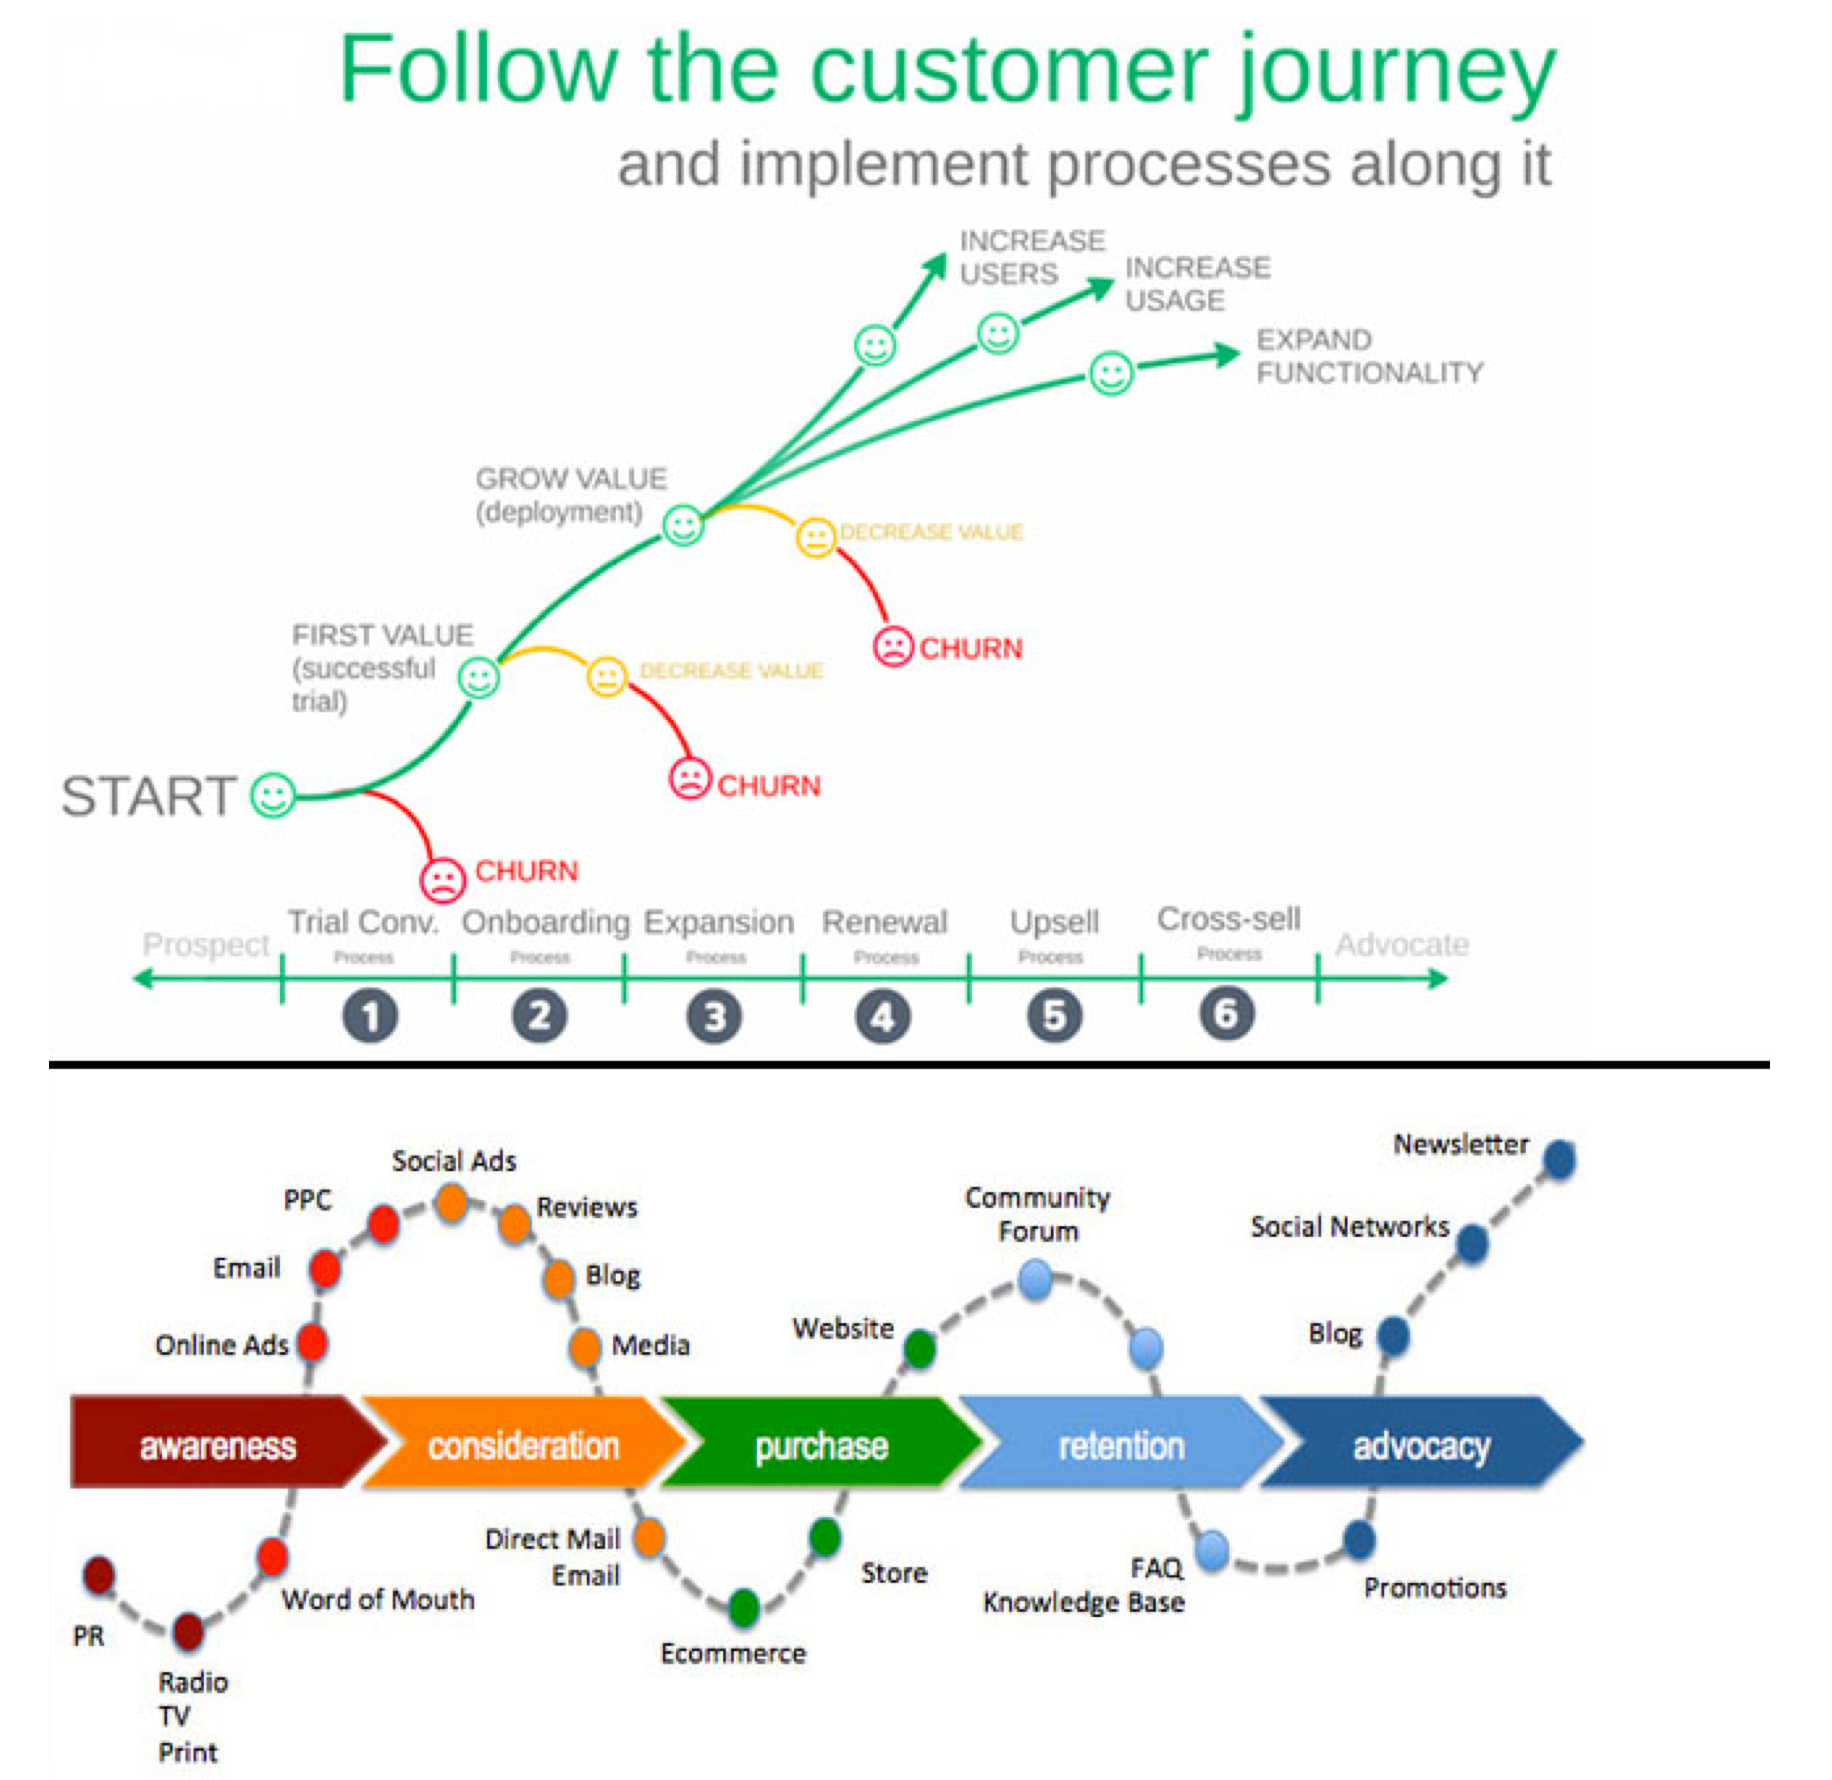 Follow the customer journey